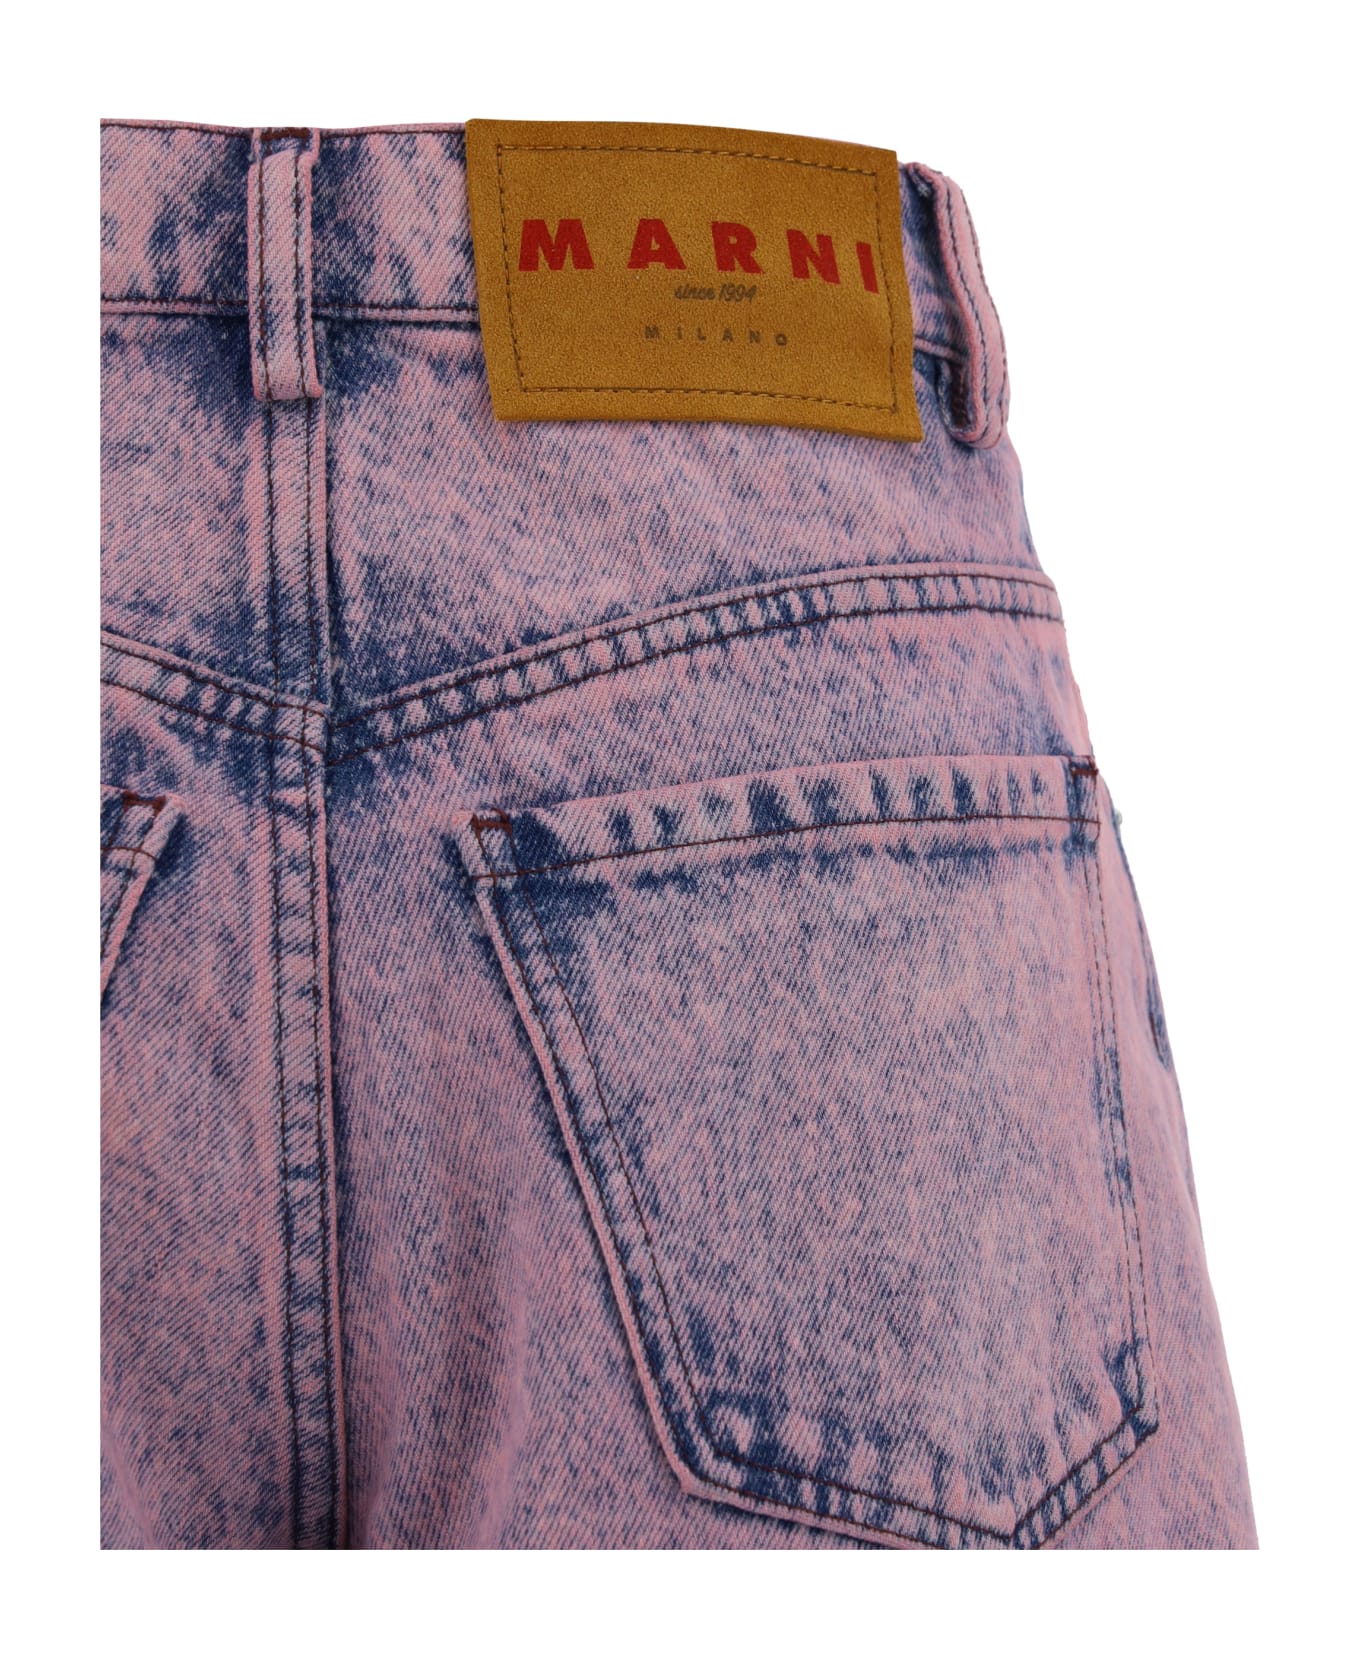 Marni Jeans - Pink Gummy